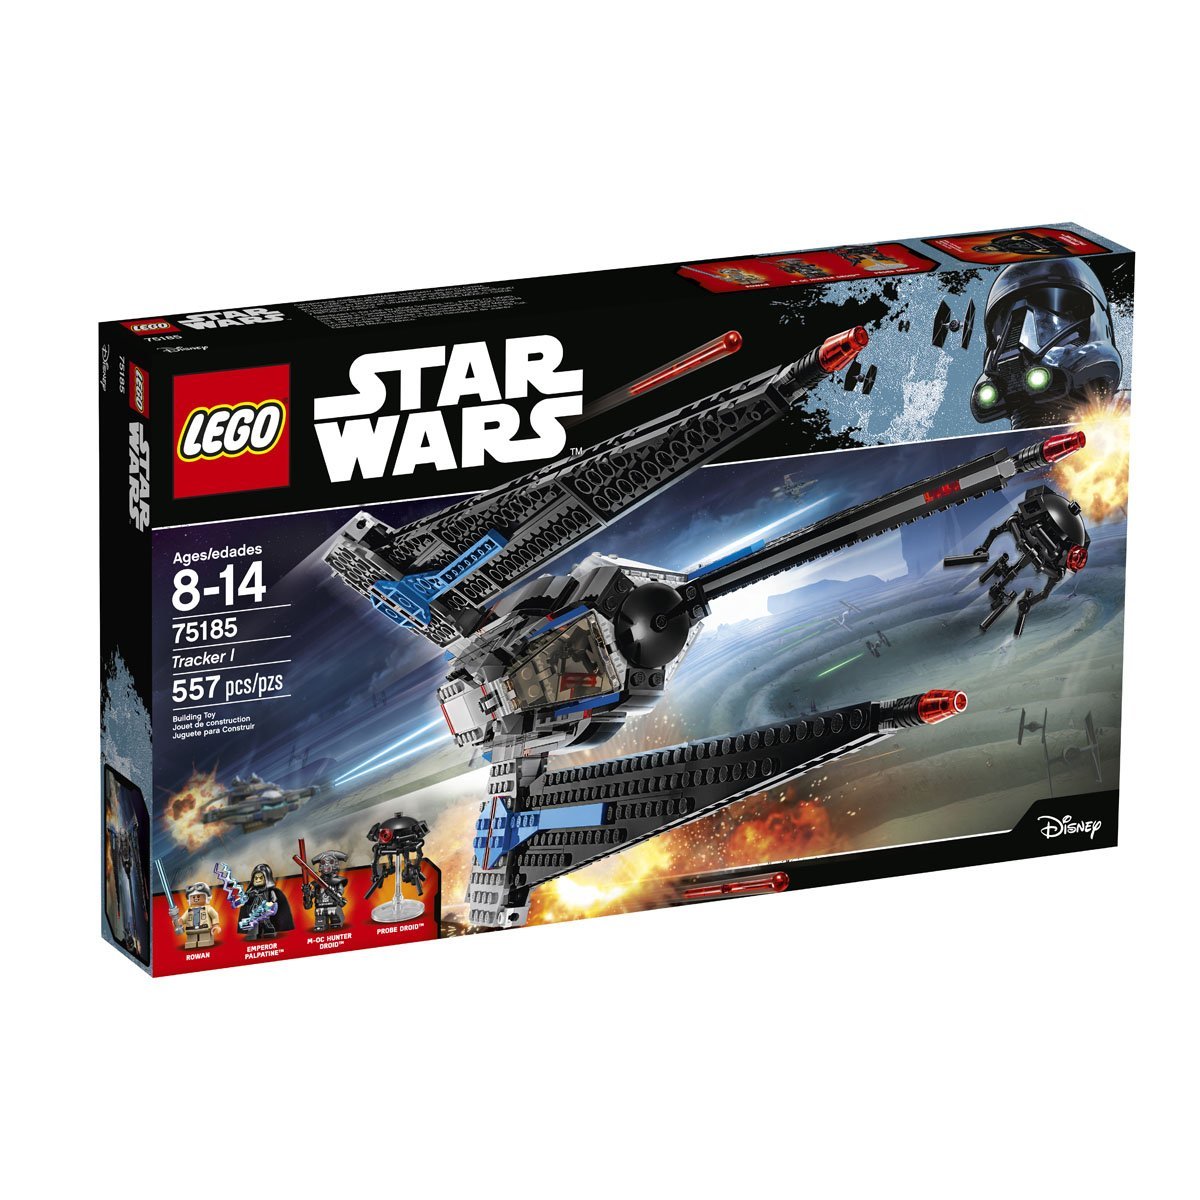 Star Wars Tracker I Lego